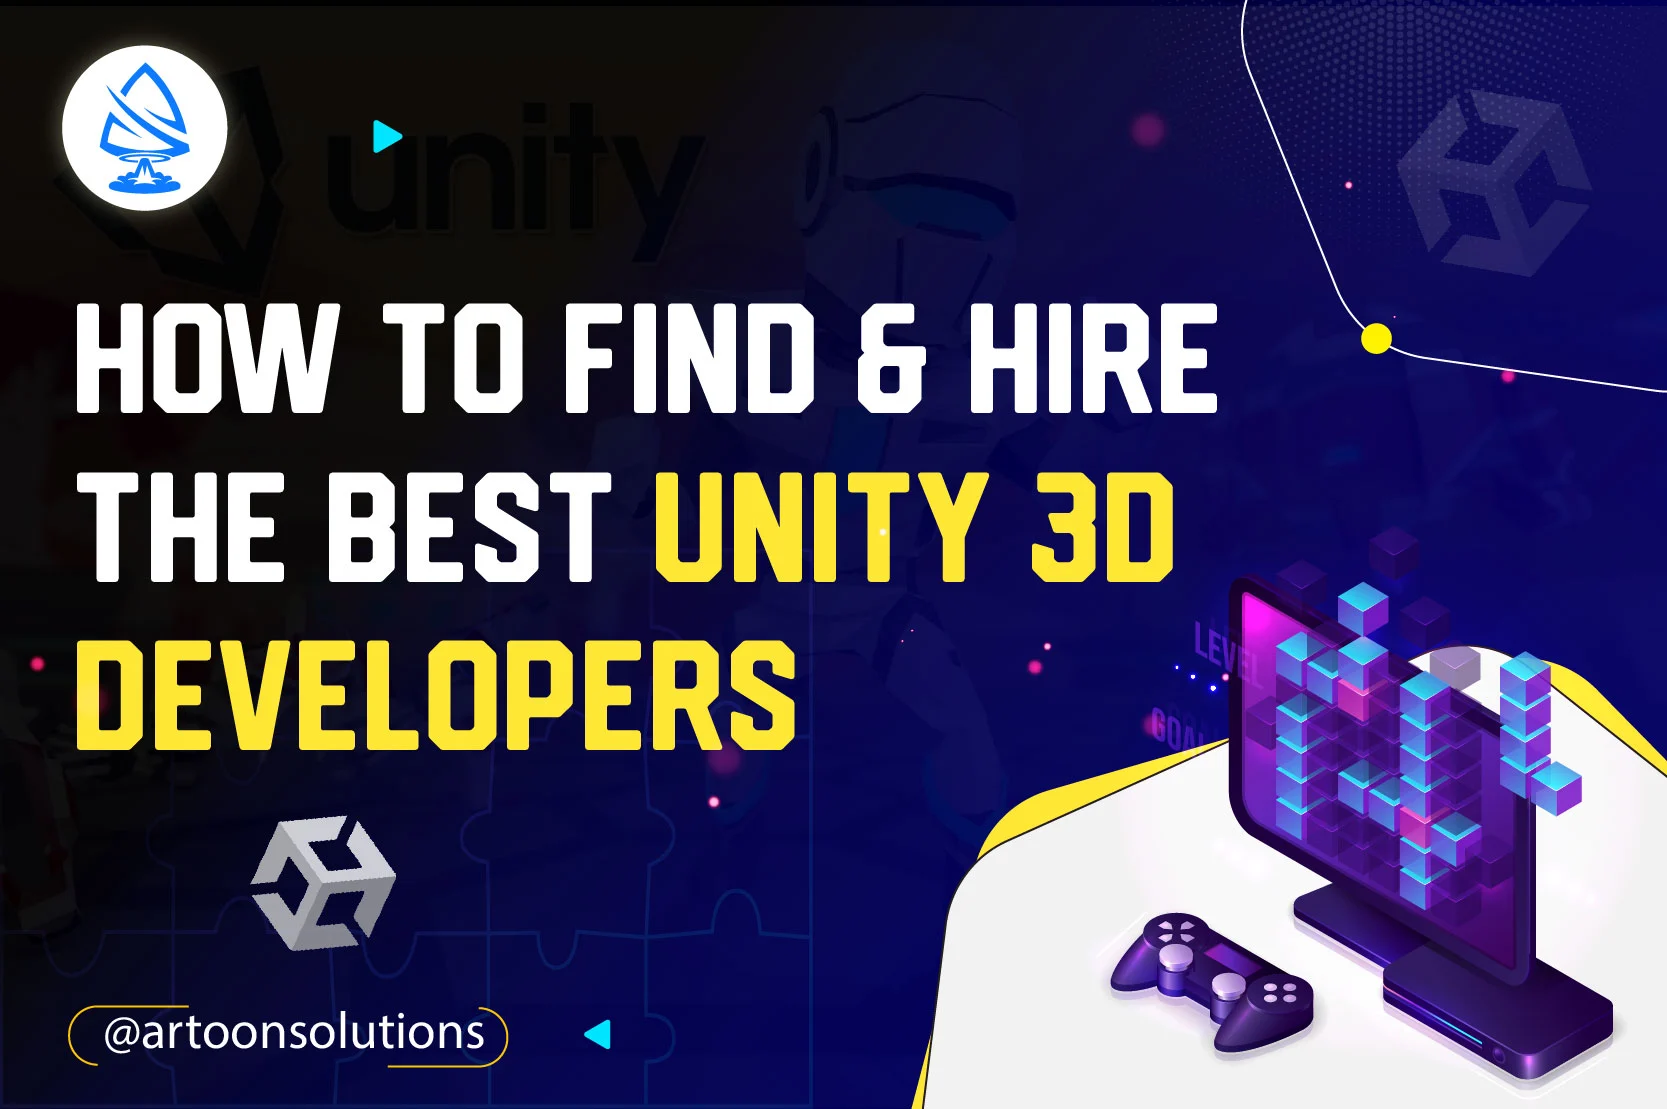 Unity 3D developers